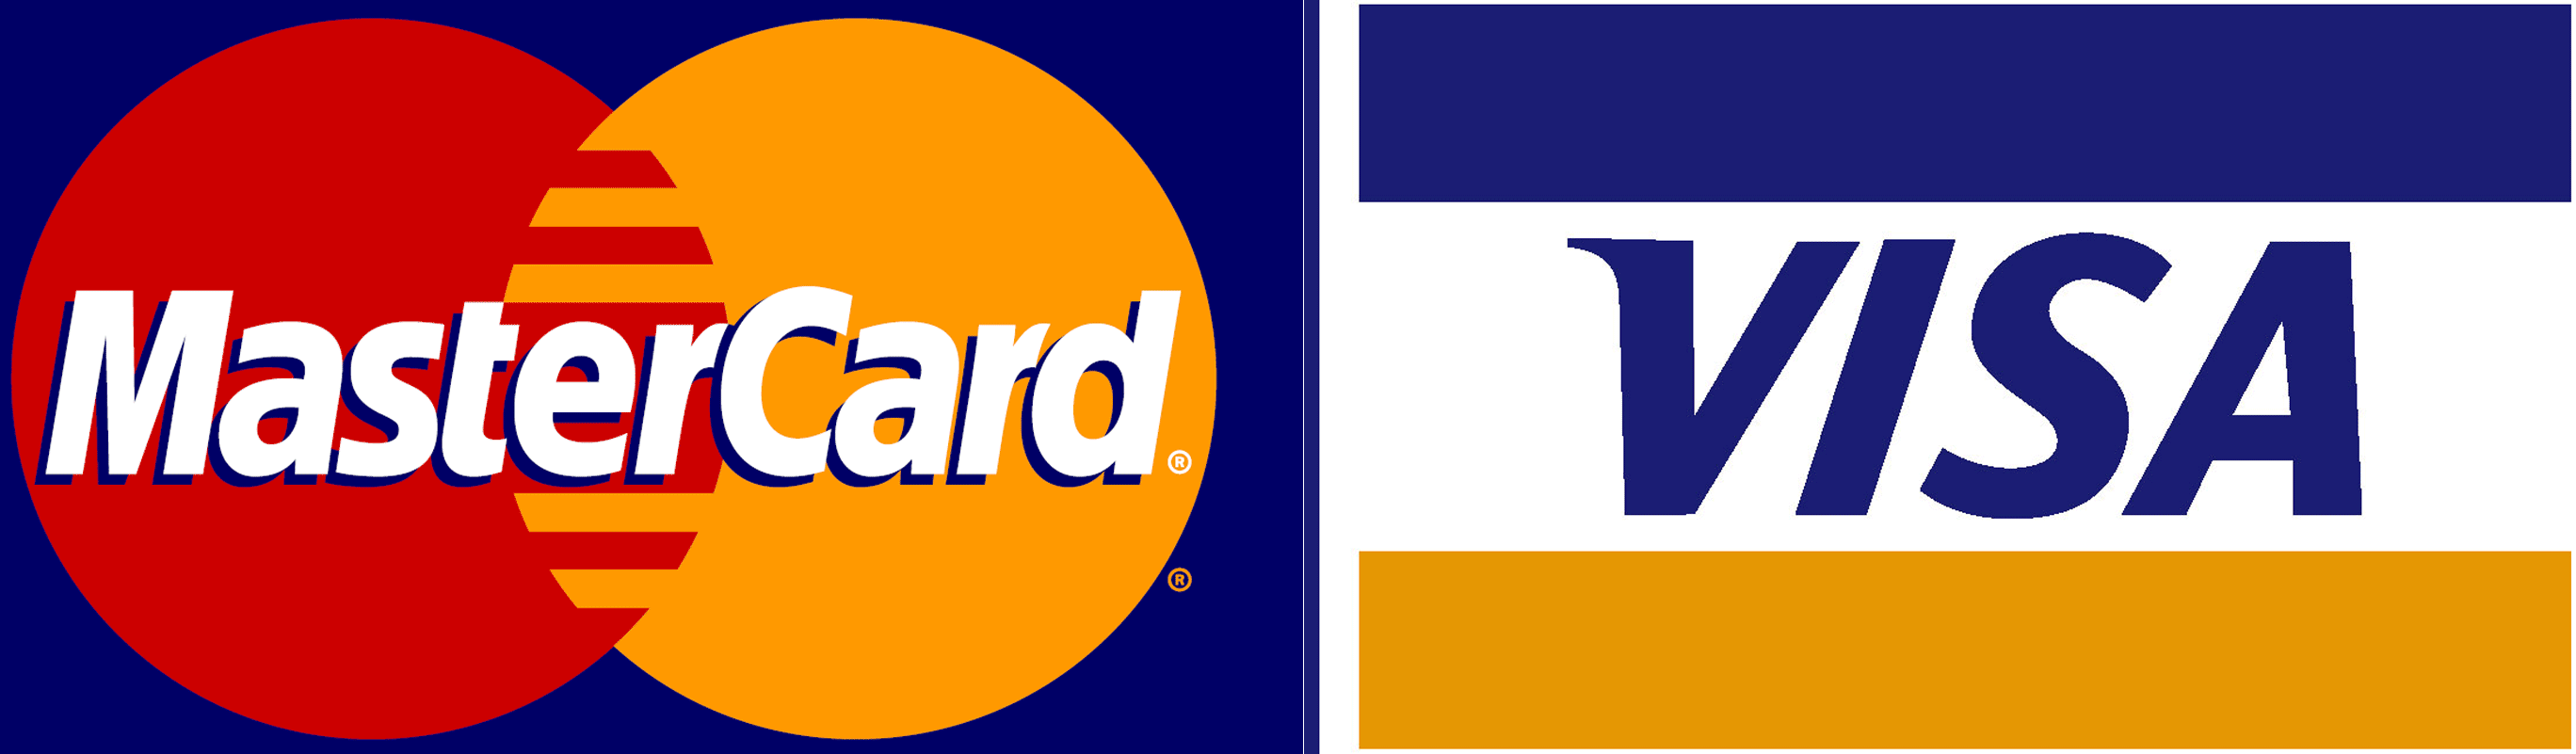 Credit Card Logos For Print